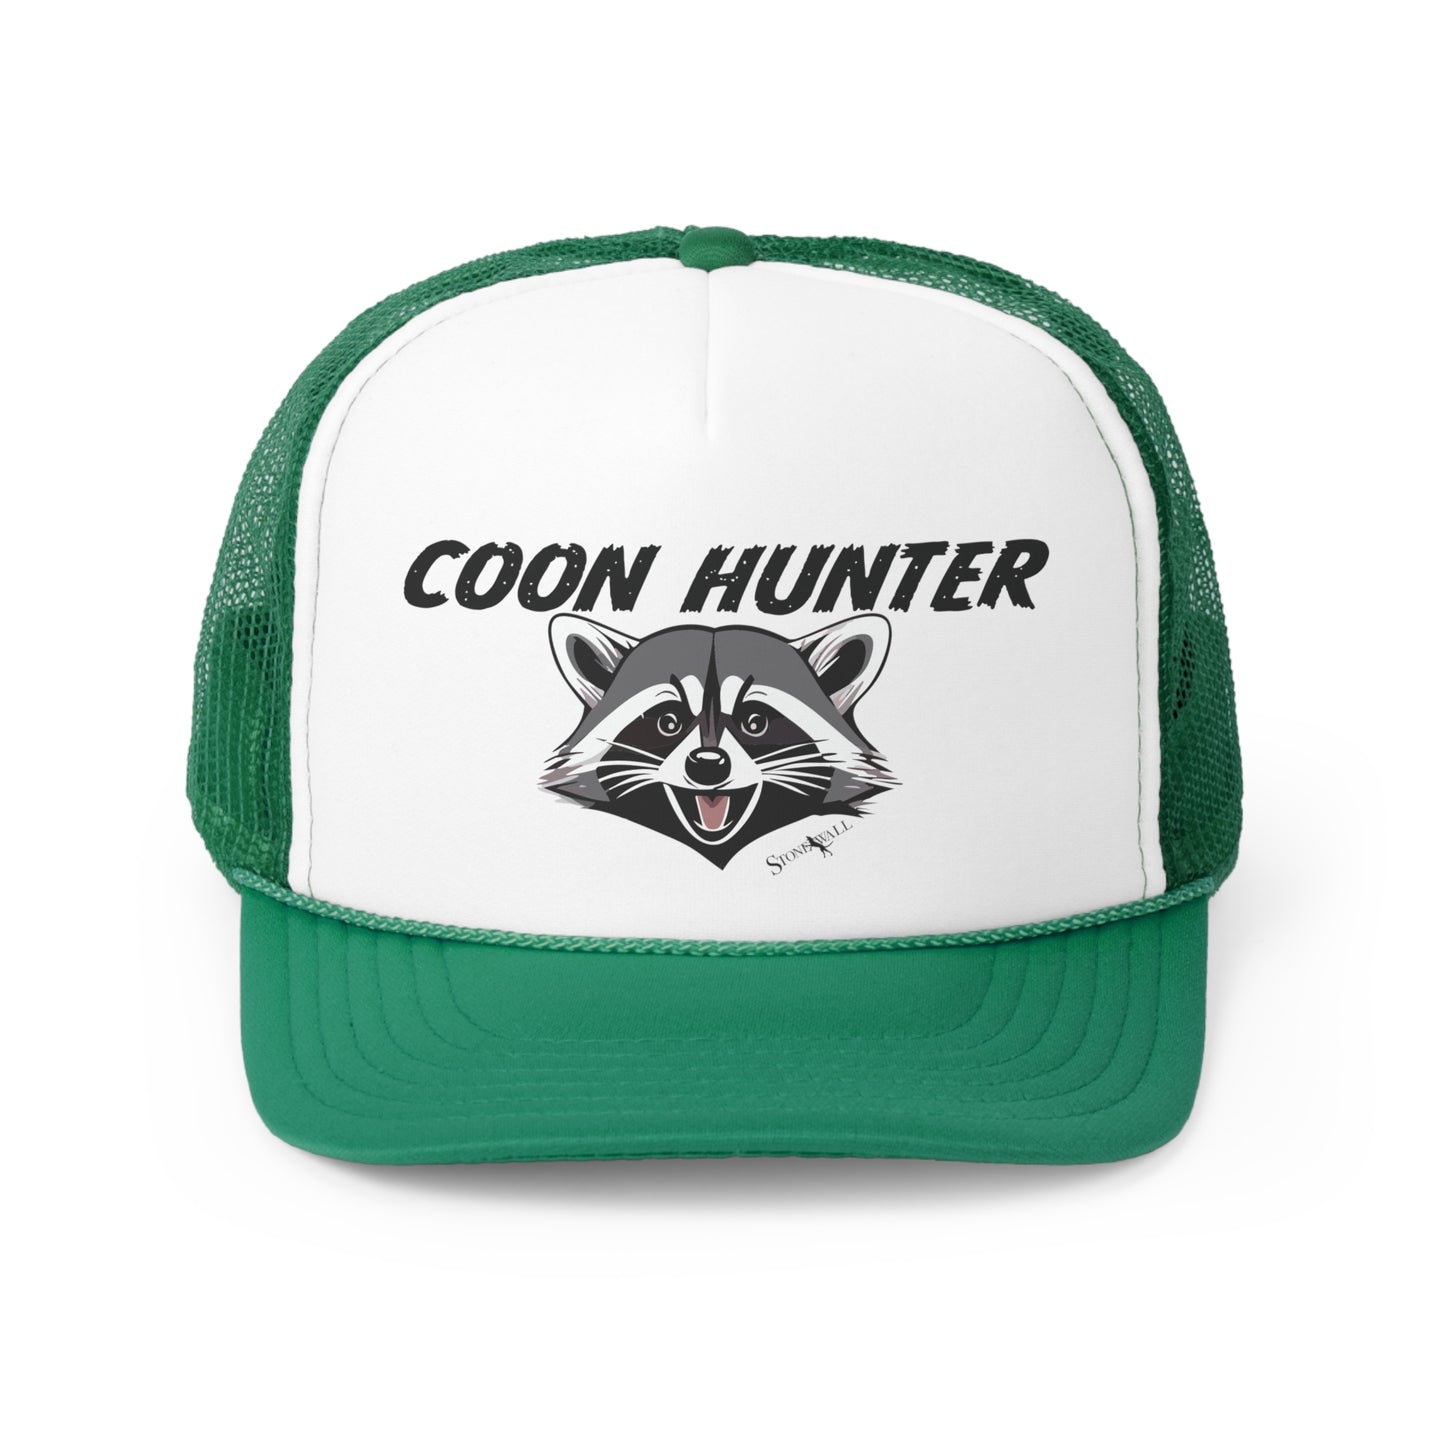 Coon Hunter